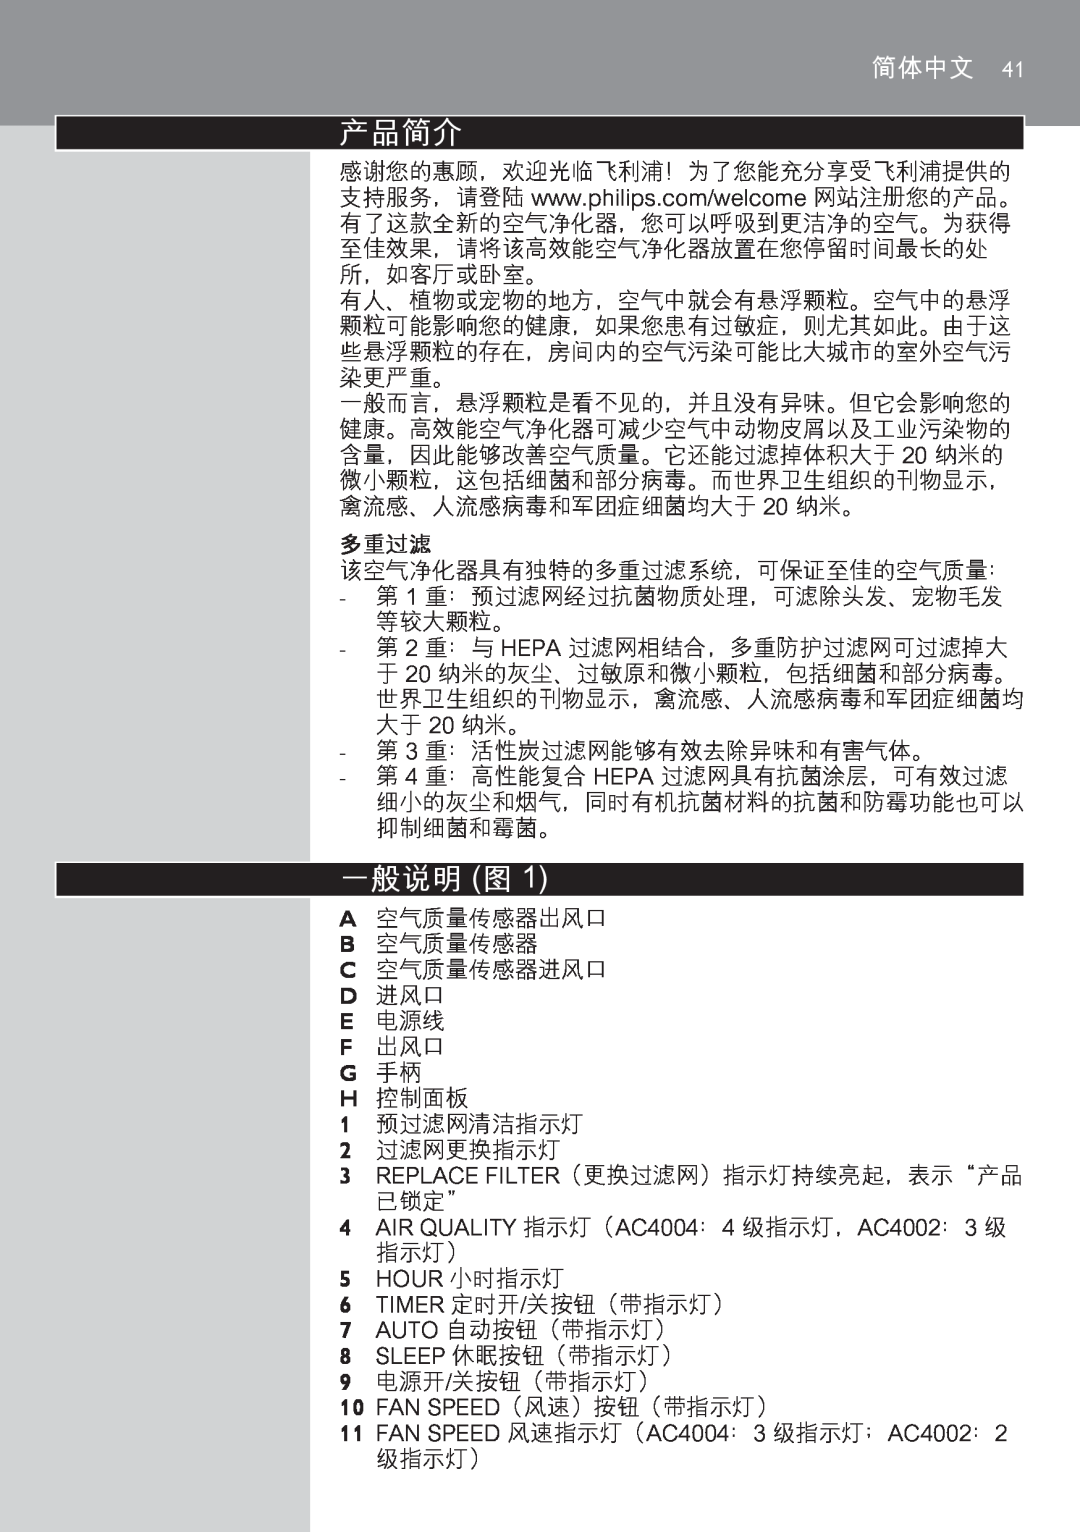 Philips AC4002 manual 产品简介, 一般说明 图 1, 多重过滤, 简体中文 